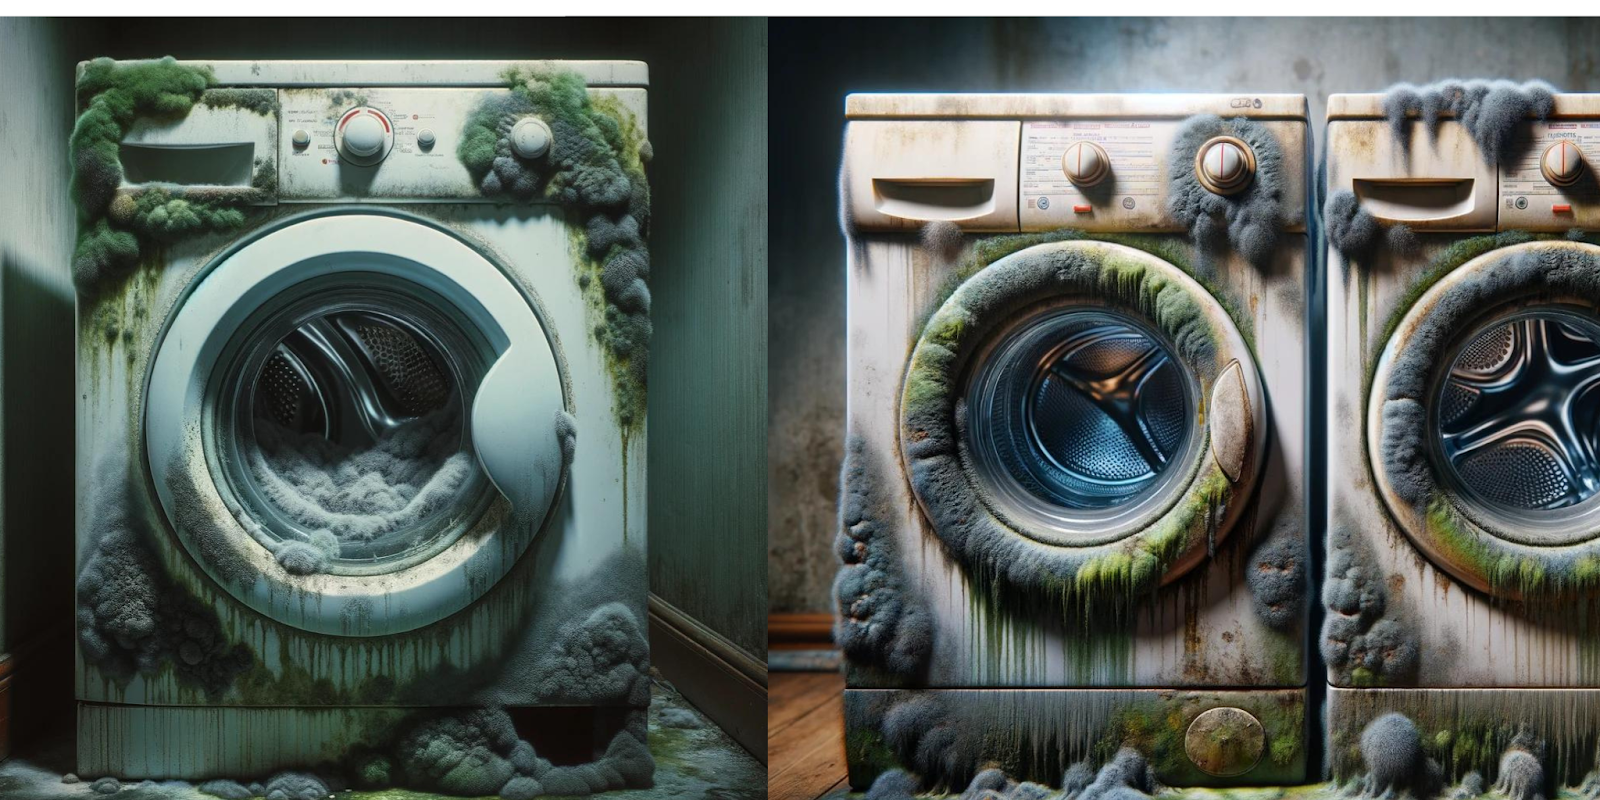 Washer machine smells like mildew or mold

mold on washing machine